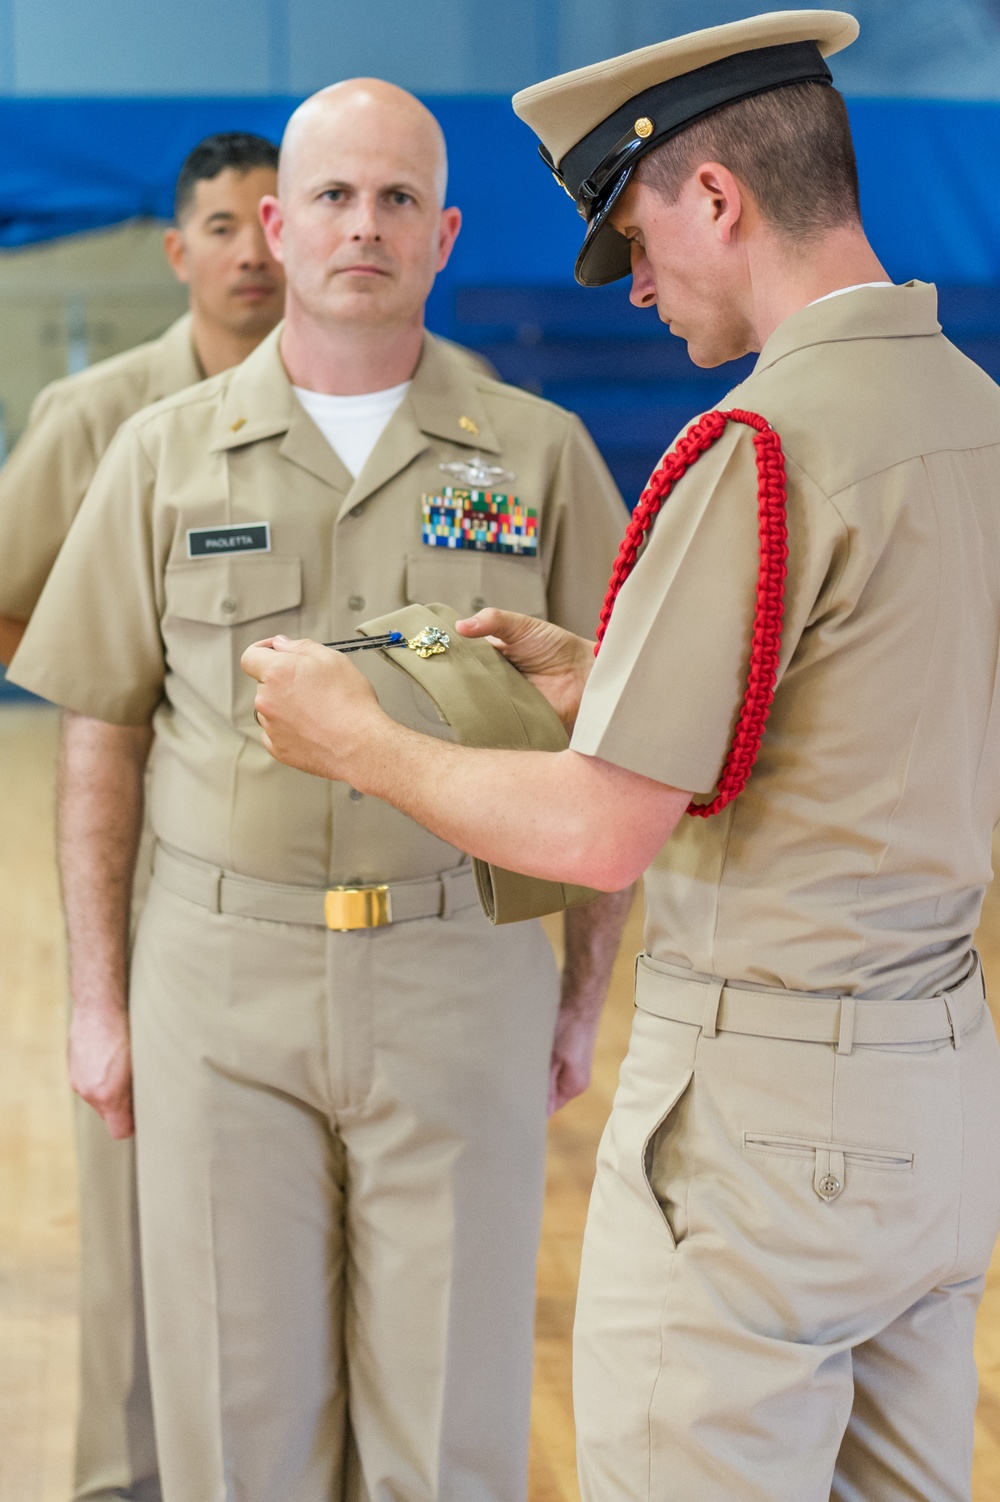 190926-N-TE695-0027 NEWPORT, R.I. (Sept. 26, 2019) -- Navy Officer Development School conduct khaki uniform inspection